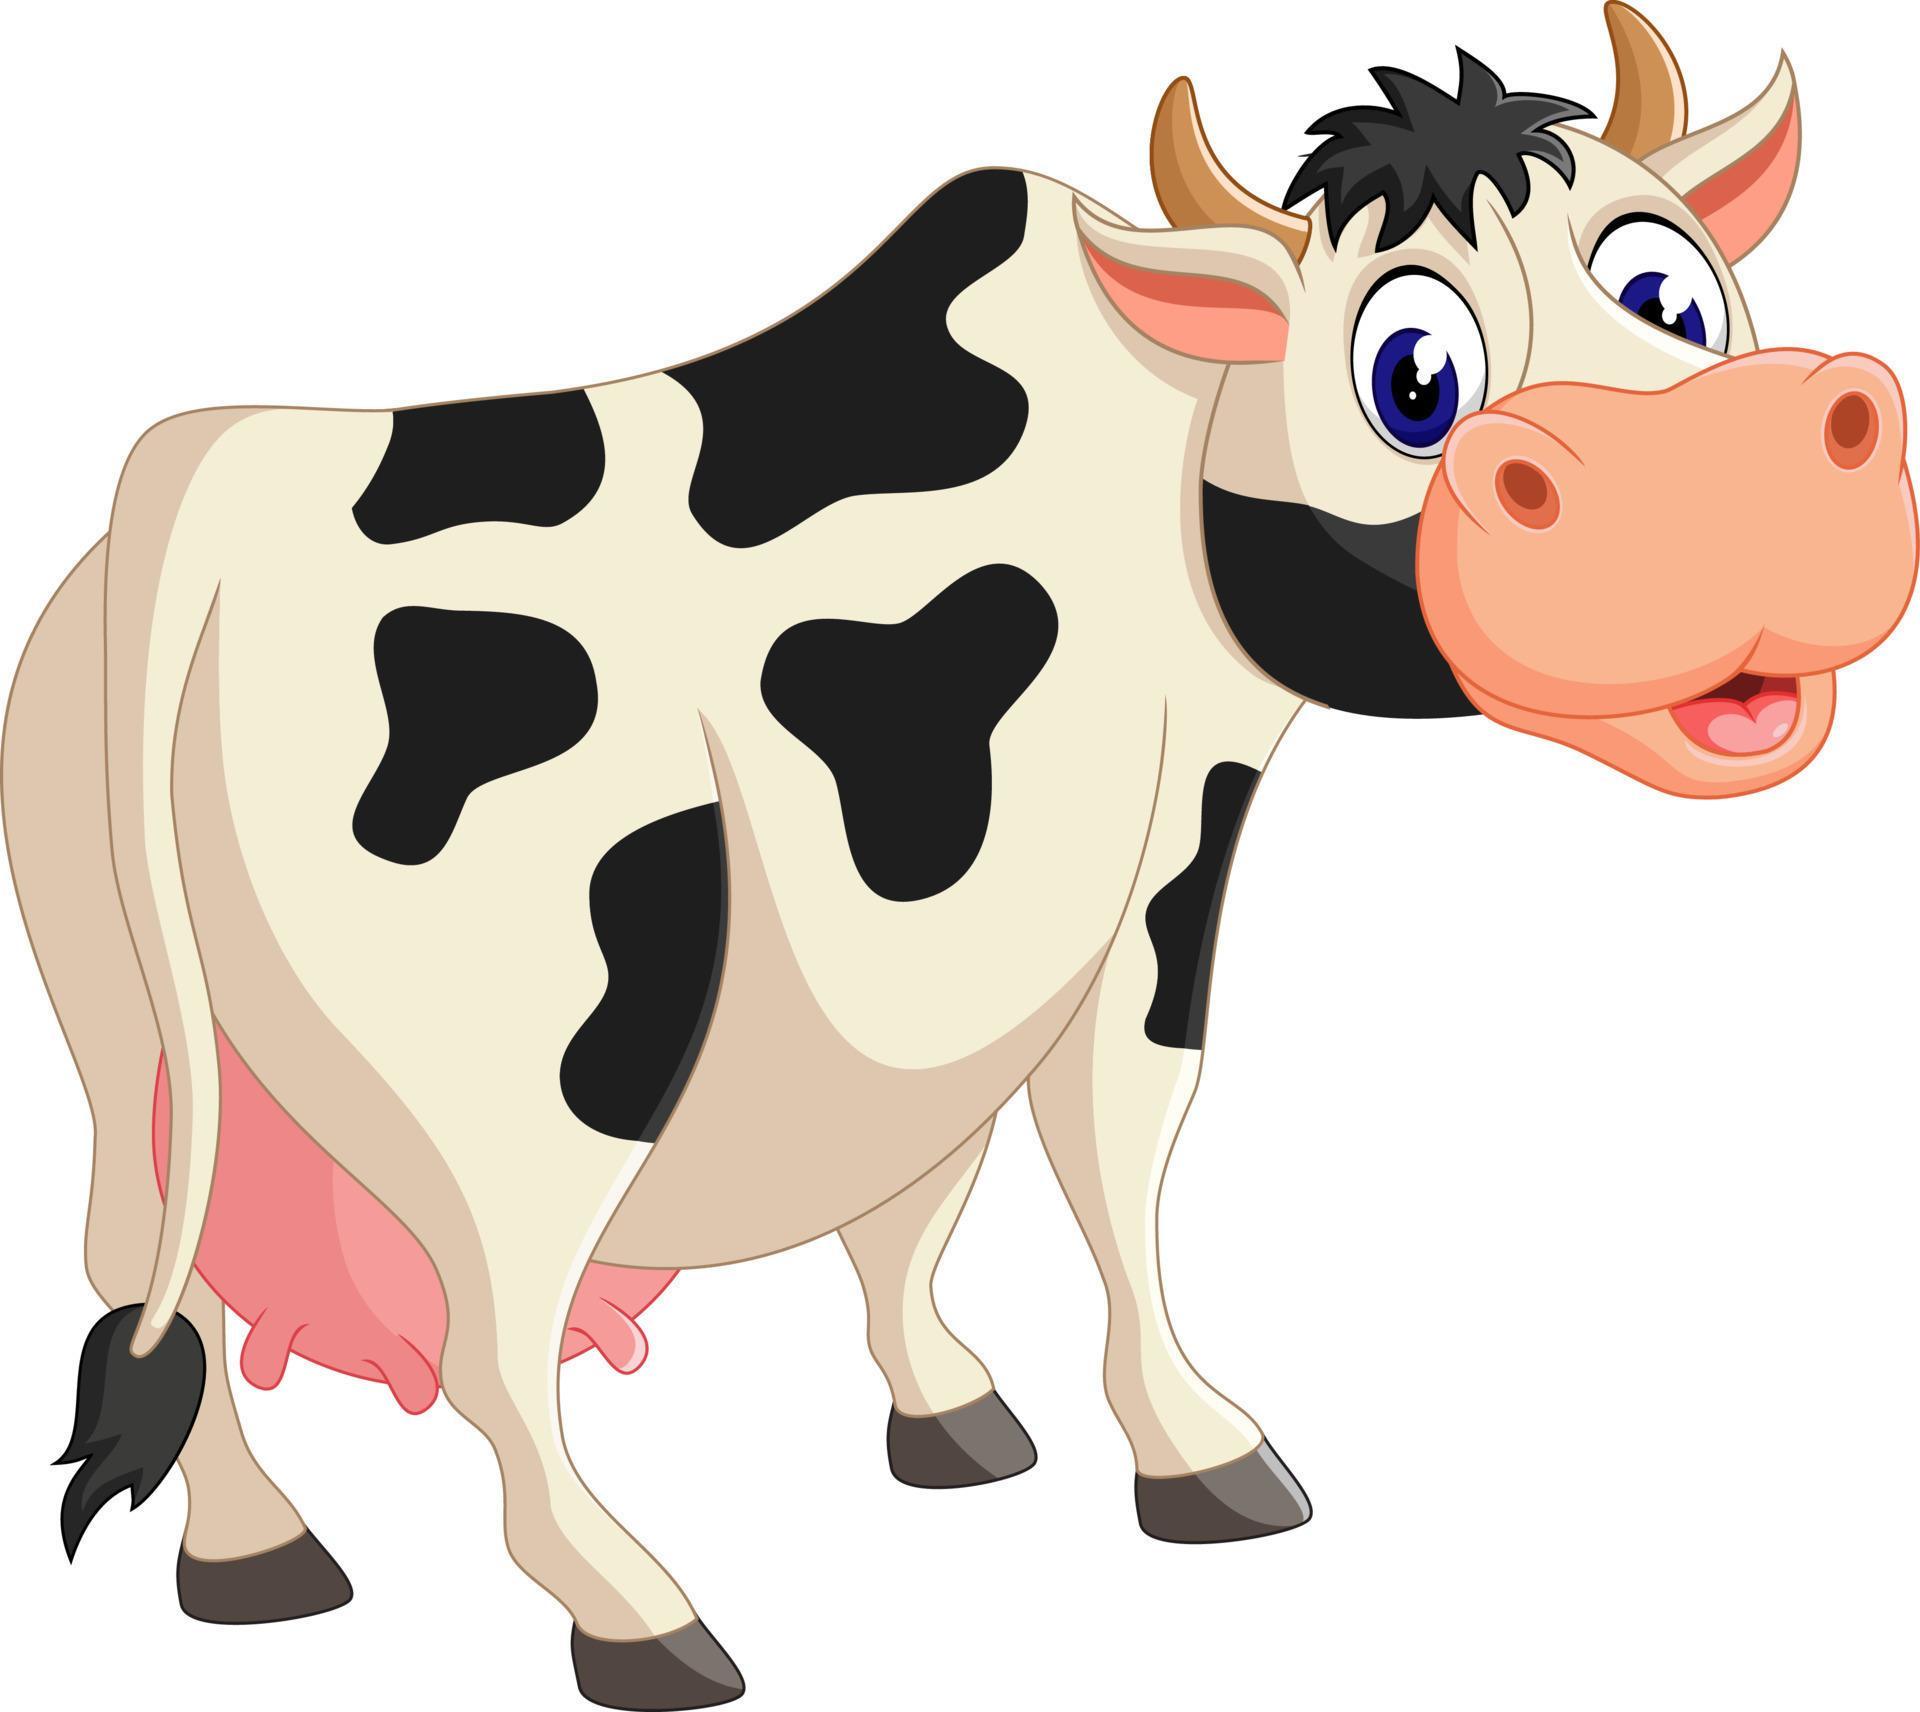 Звук издает корова. Корова мычит. Корова мультяшная. Корова без фона. Корова для детей на прозрачном фоне.